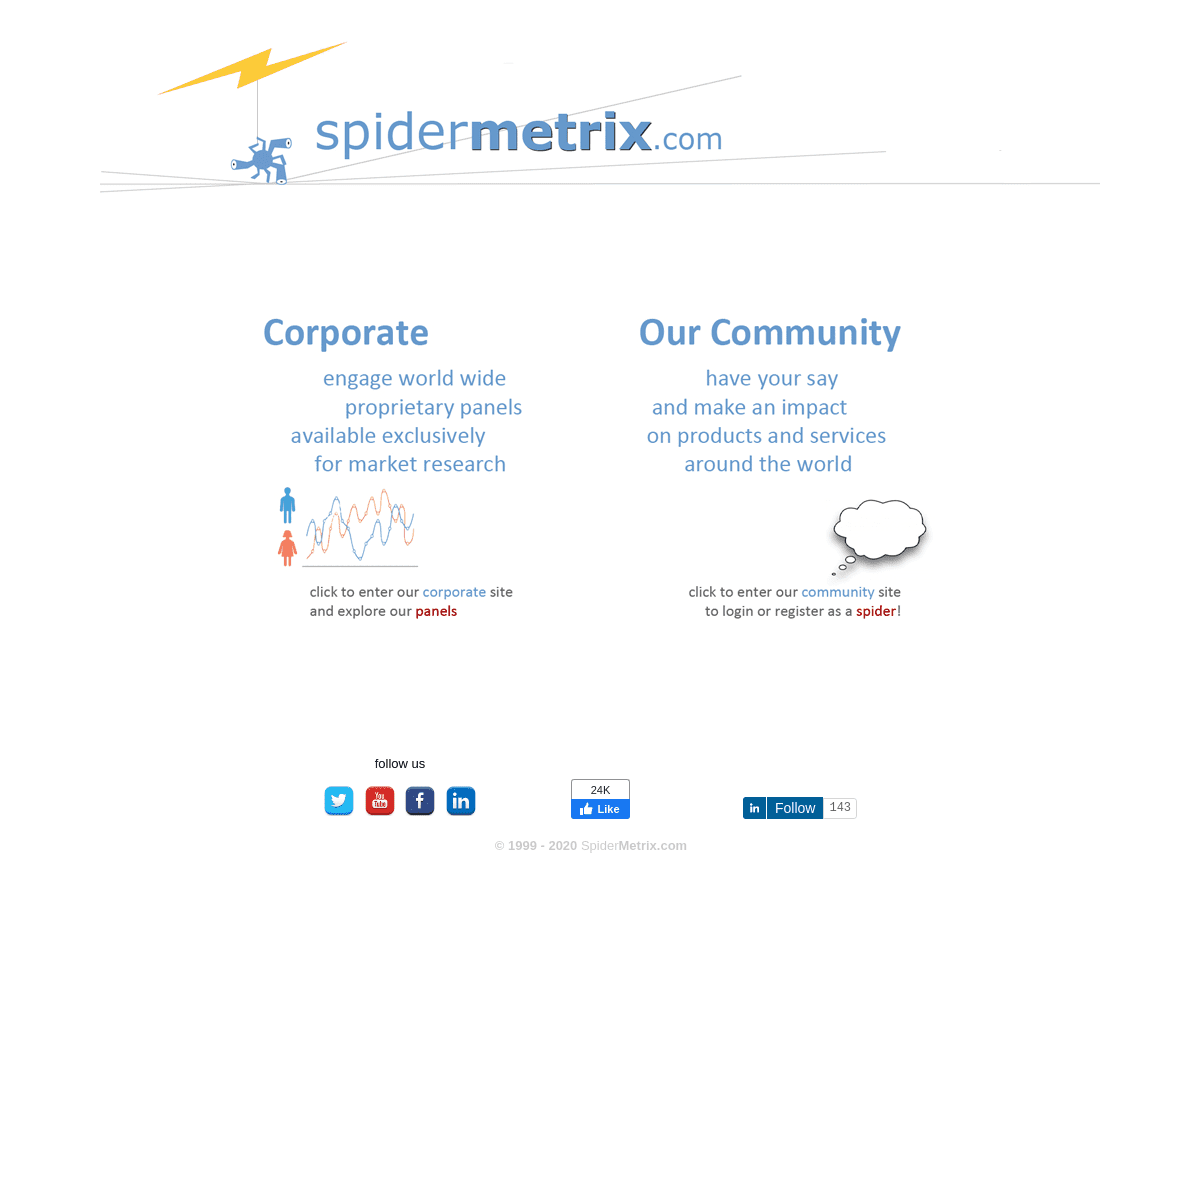 A complete backup of spidermetrix.com